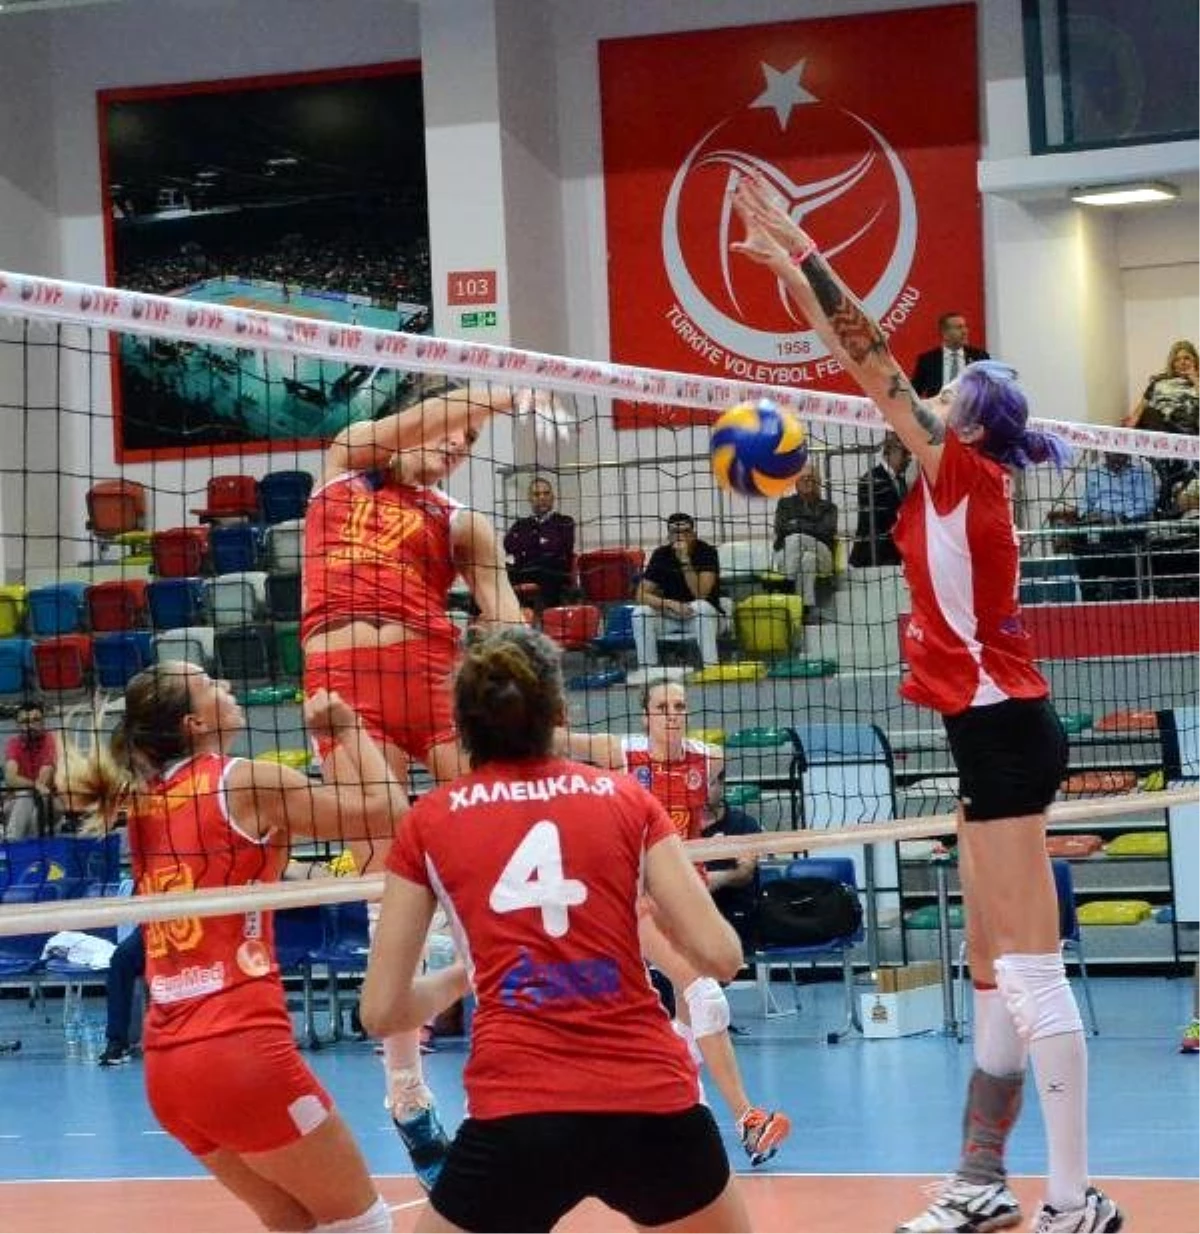 Cengiz Göllü Voleybol Turnuvası: Proton Saratov-Telekom Bakü: 2-3 Proton Saratov Şampiyon